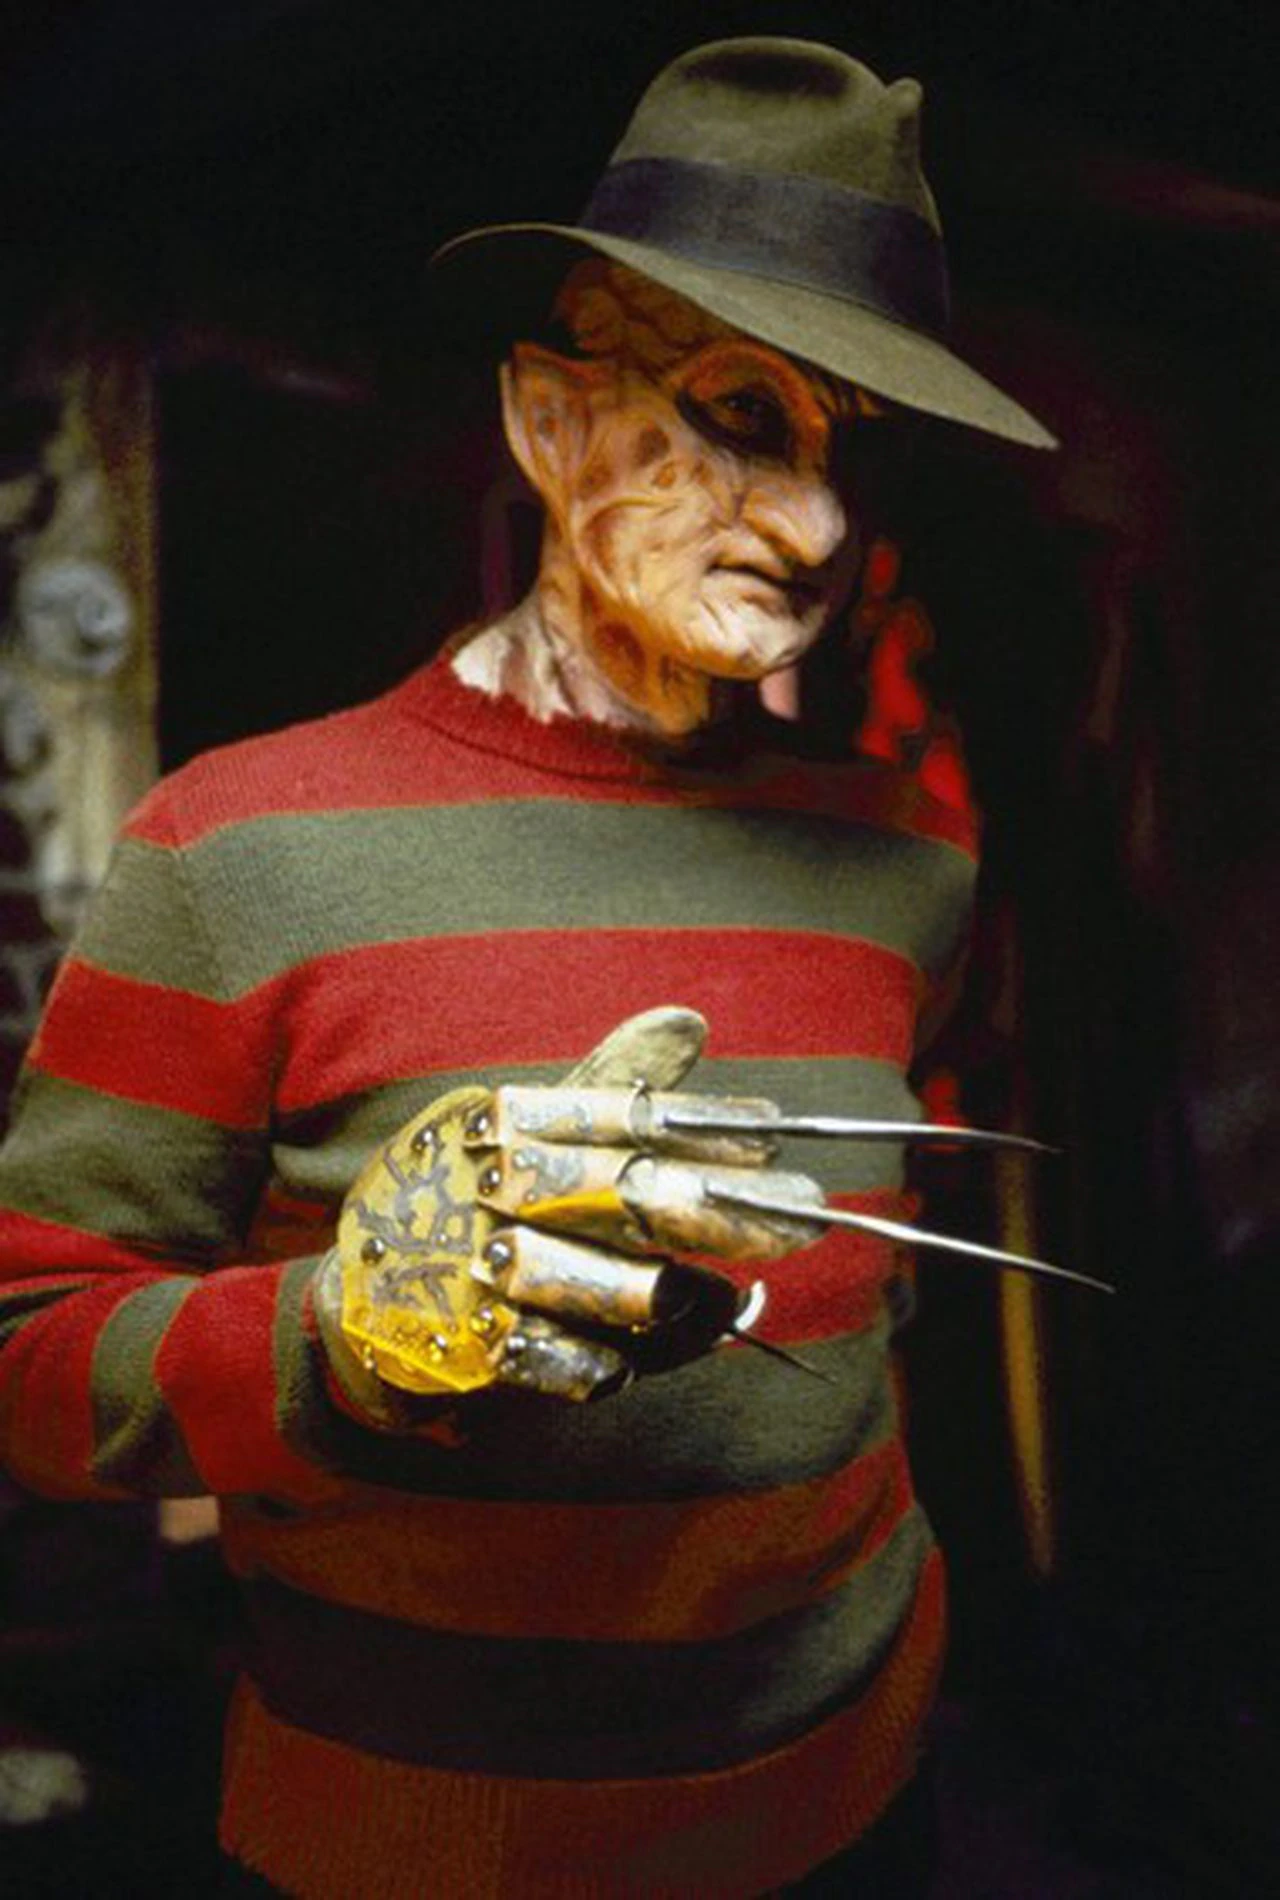 The Secret behind Freddy’s Glove